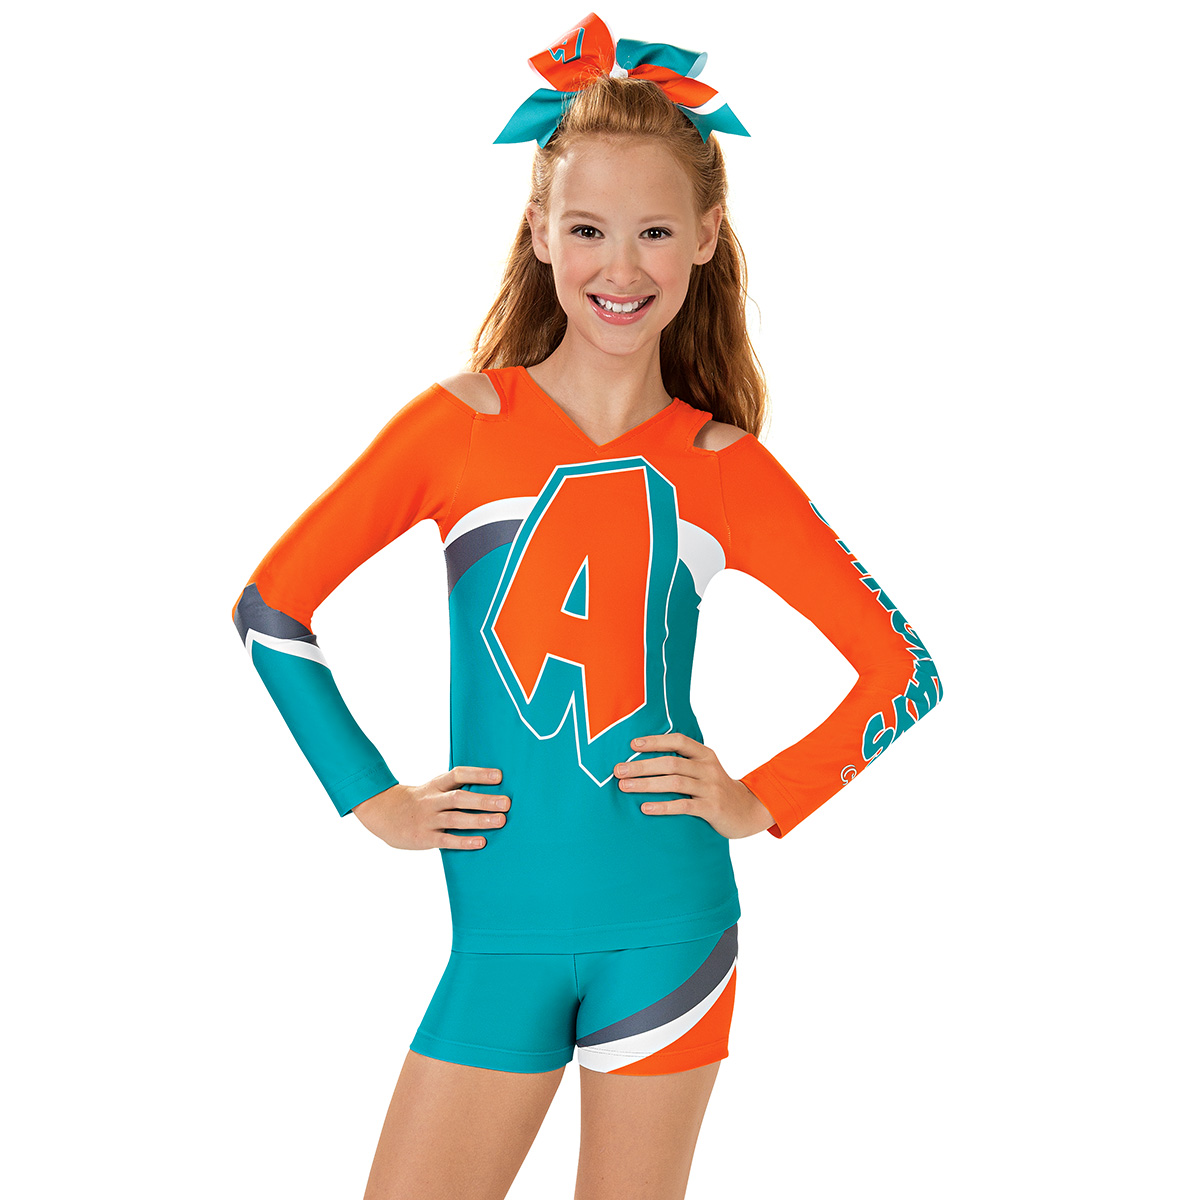 Lethal company girl. Cheerleading Performance uniform.